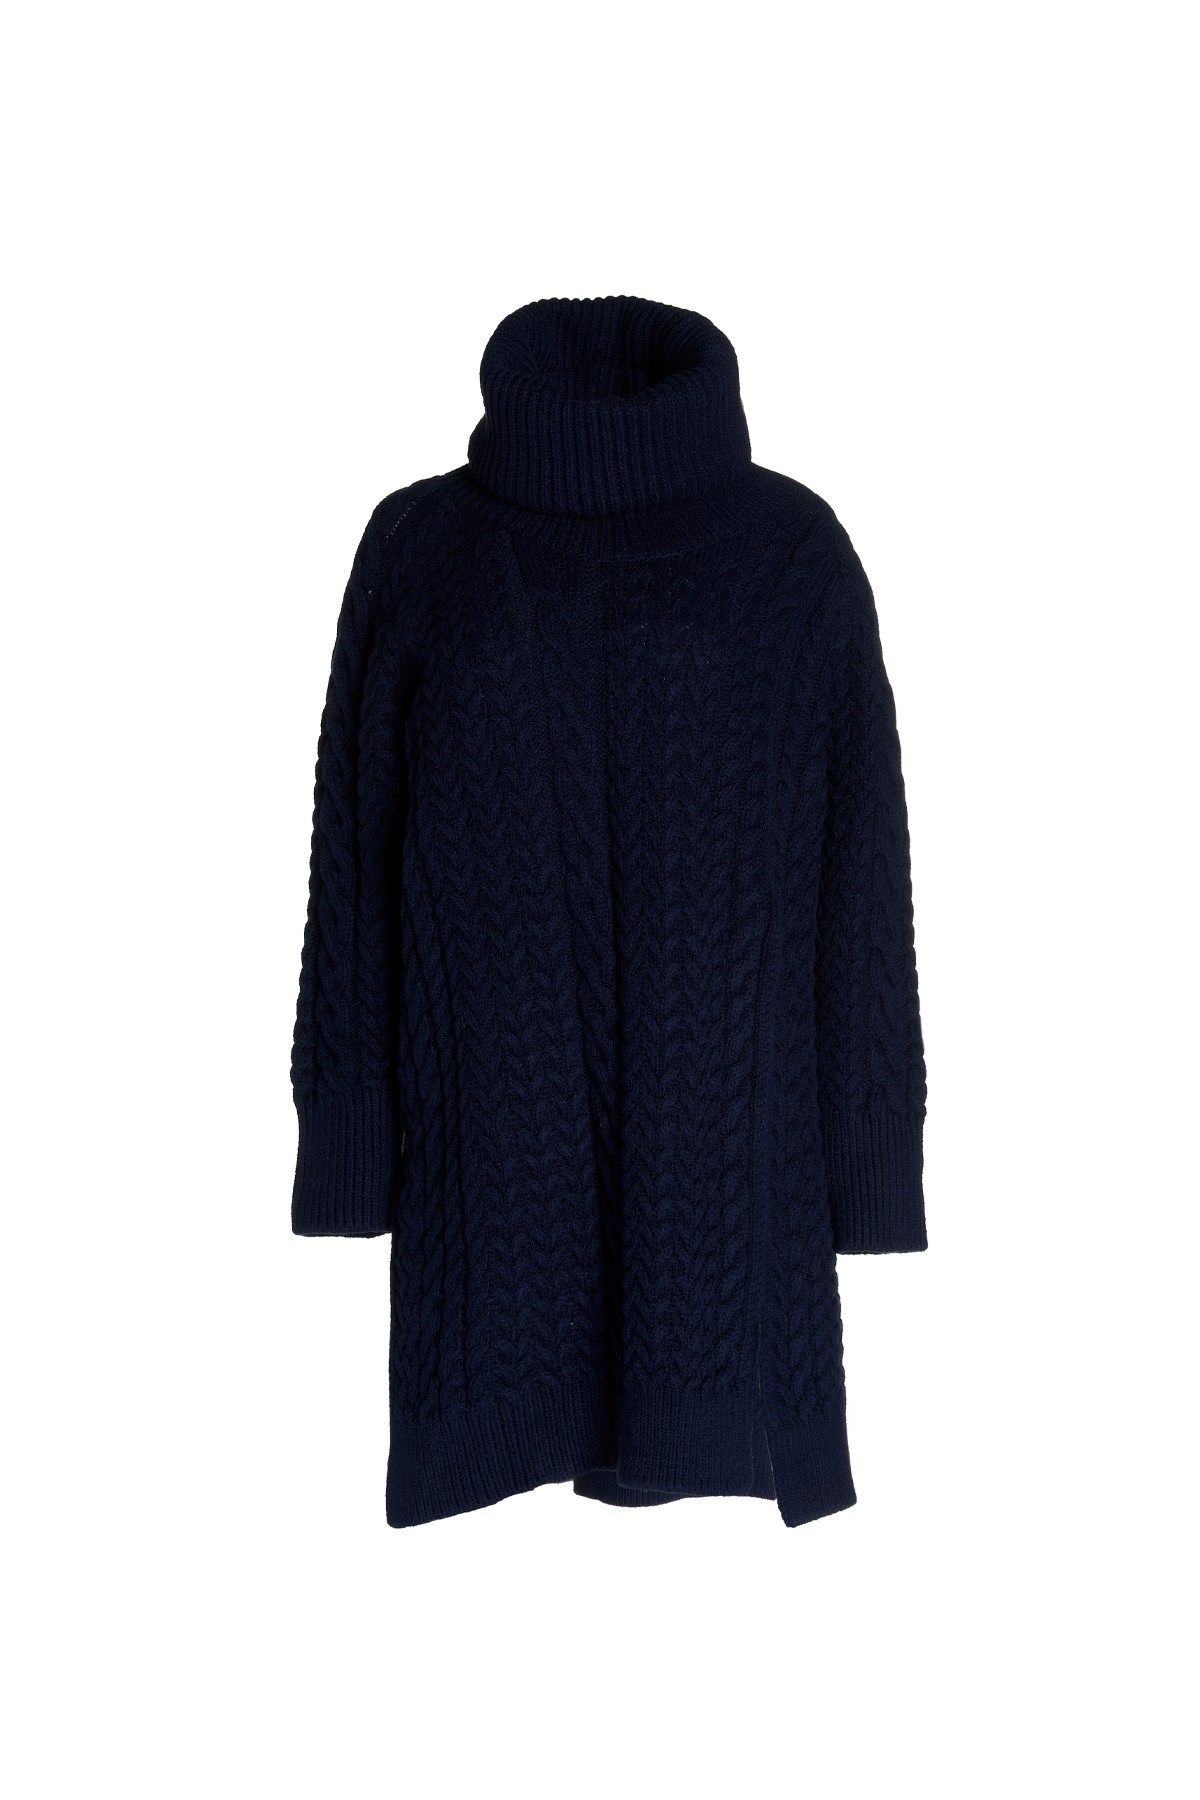 STELLA MCCARTNEY 'Aran Stitch’ Sweater